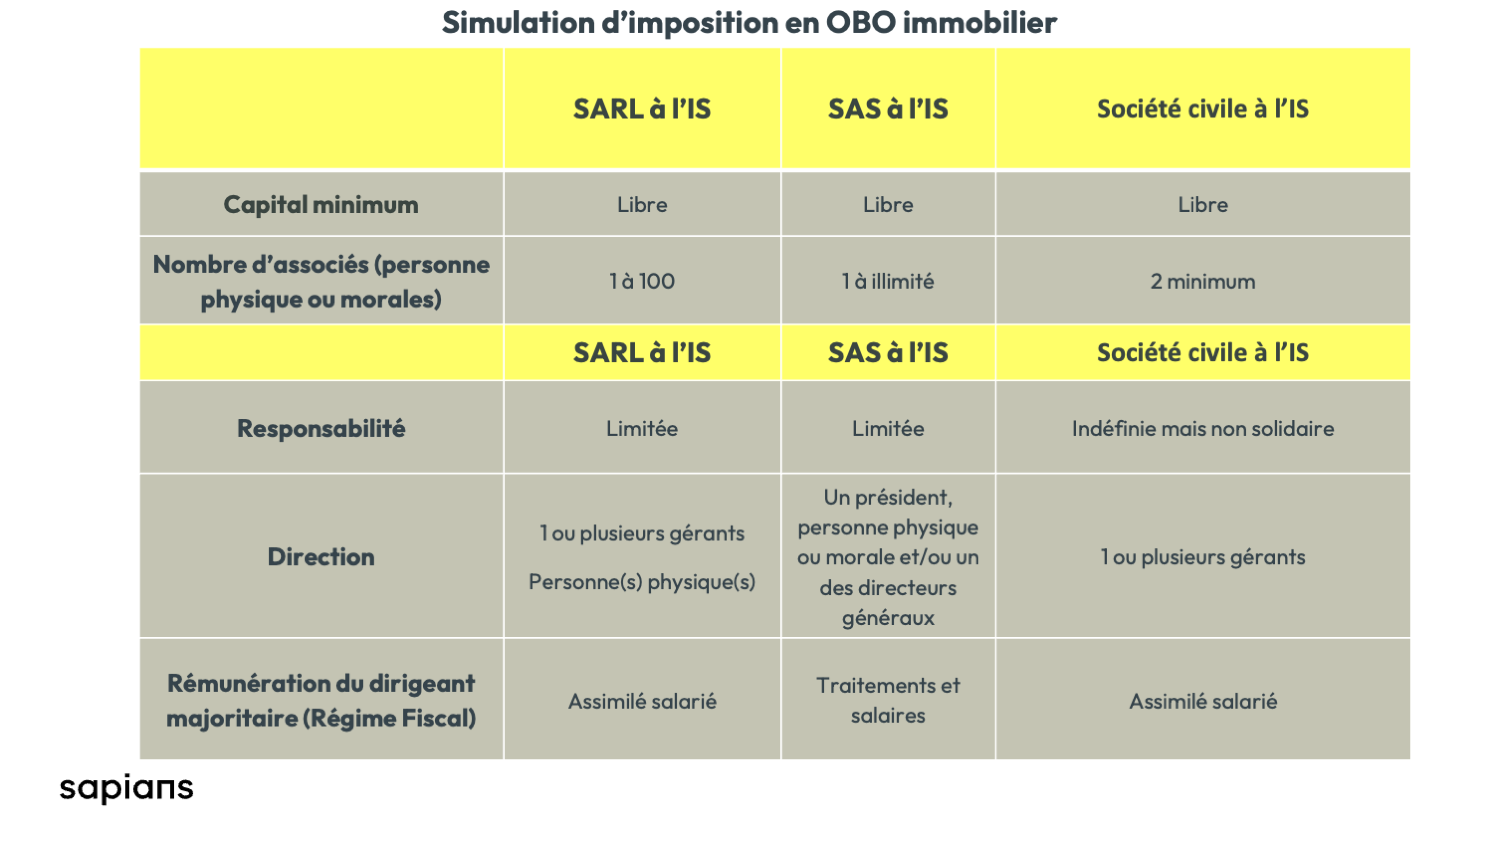 a-simulation-imposition-en-obo-immobilier